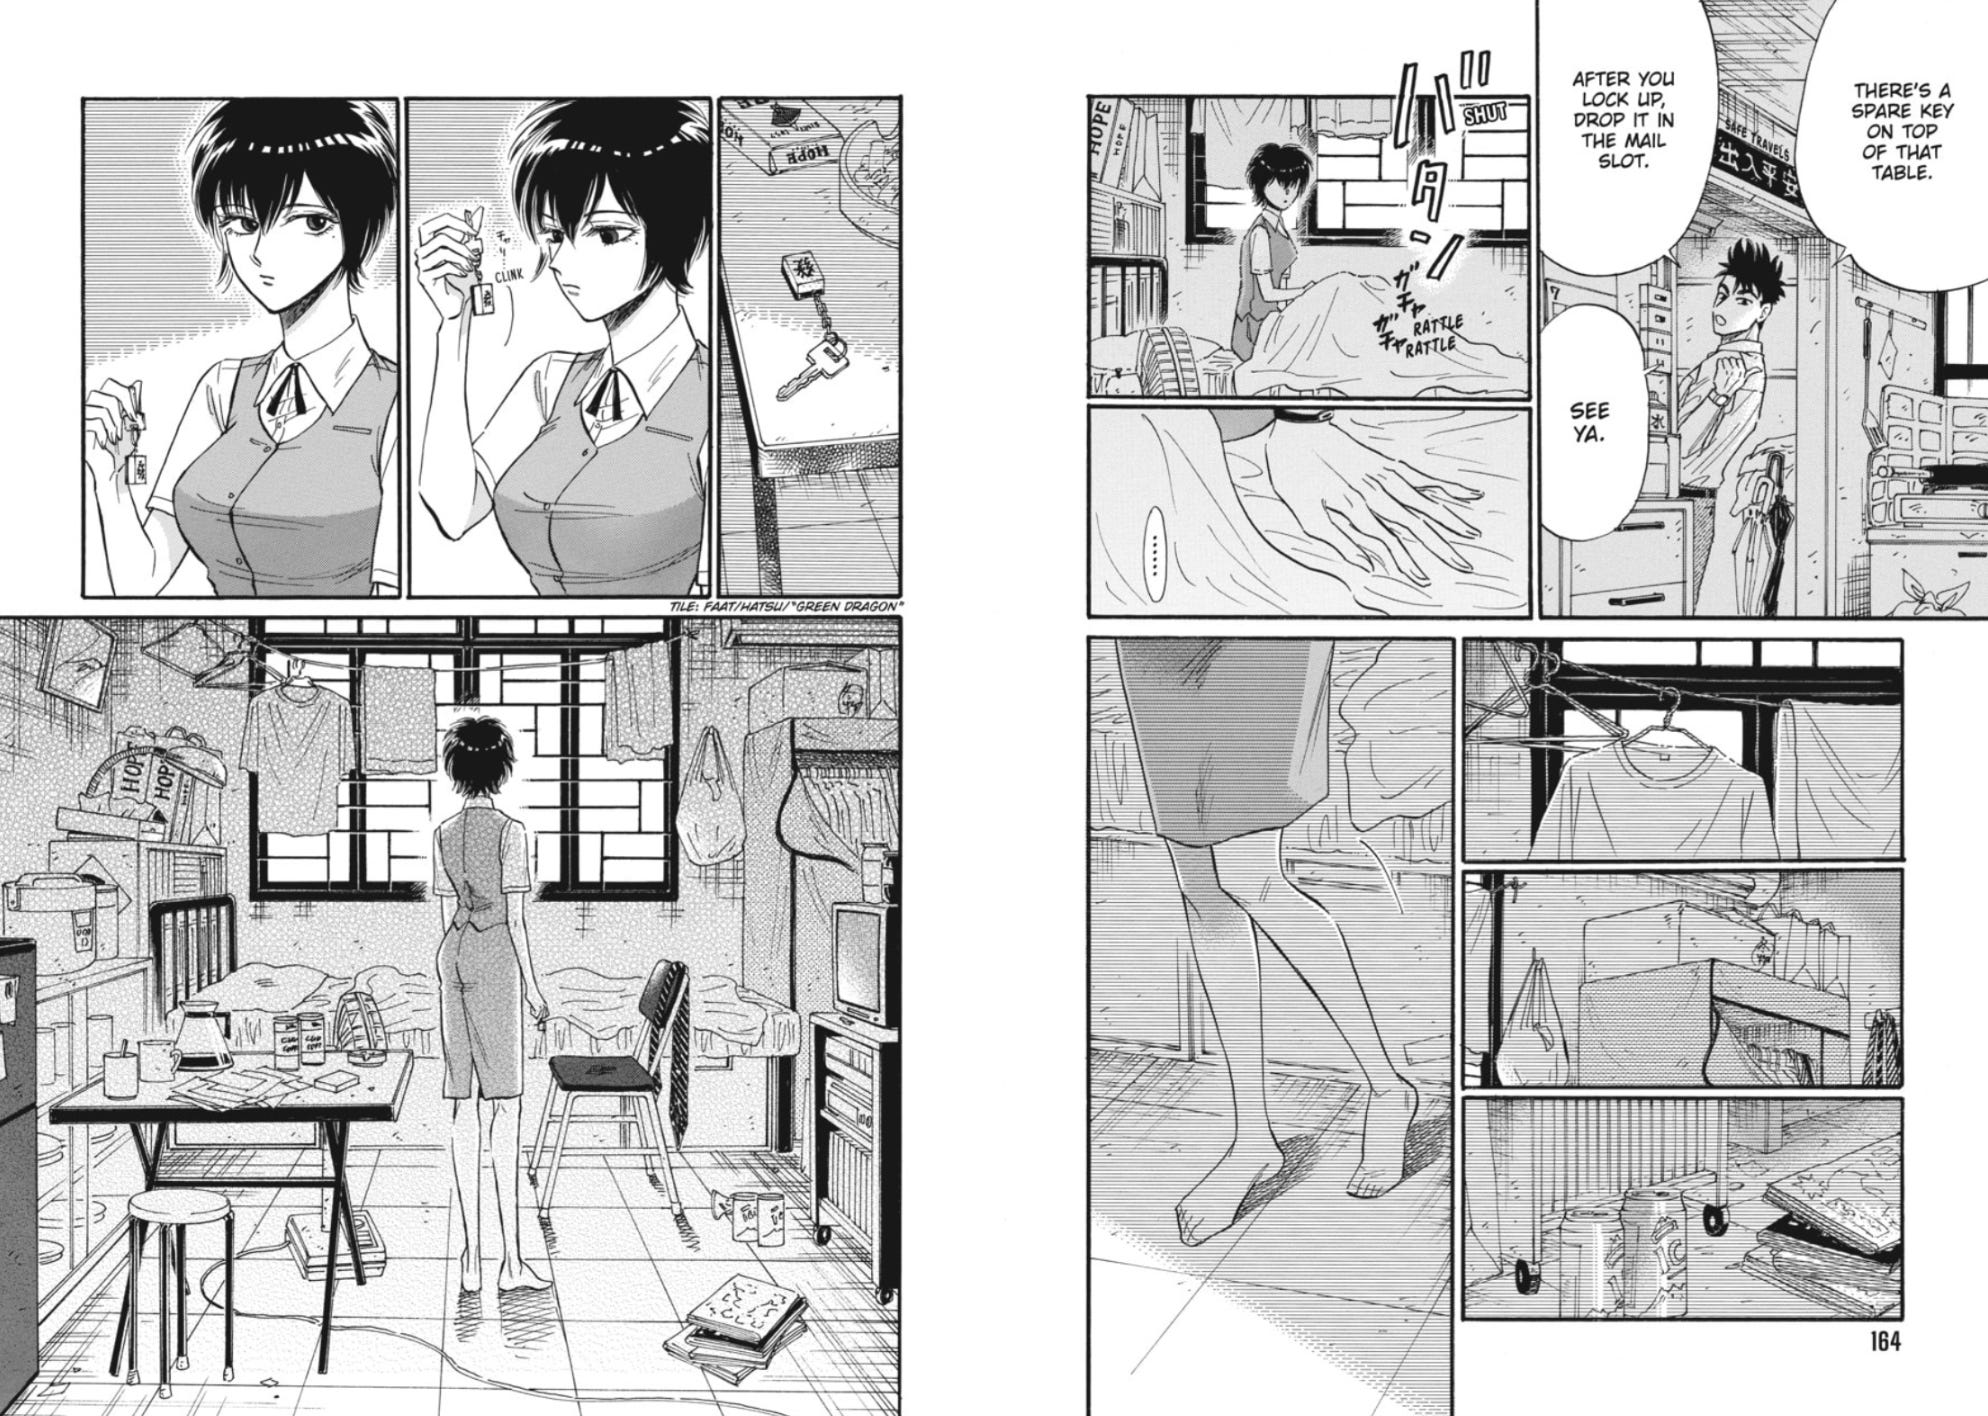 88 ideas de Manga  manga shoujo, manga shojo, anime manga